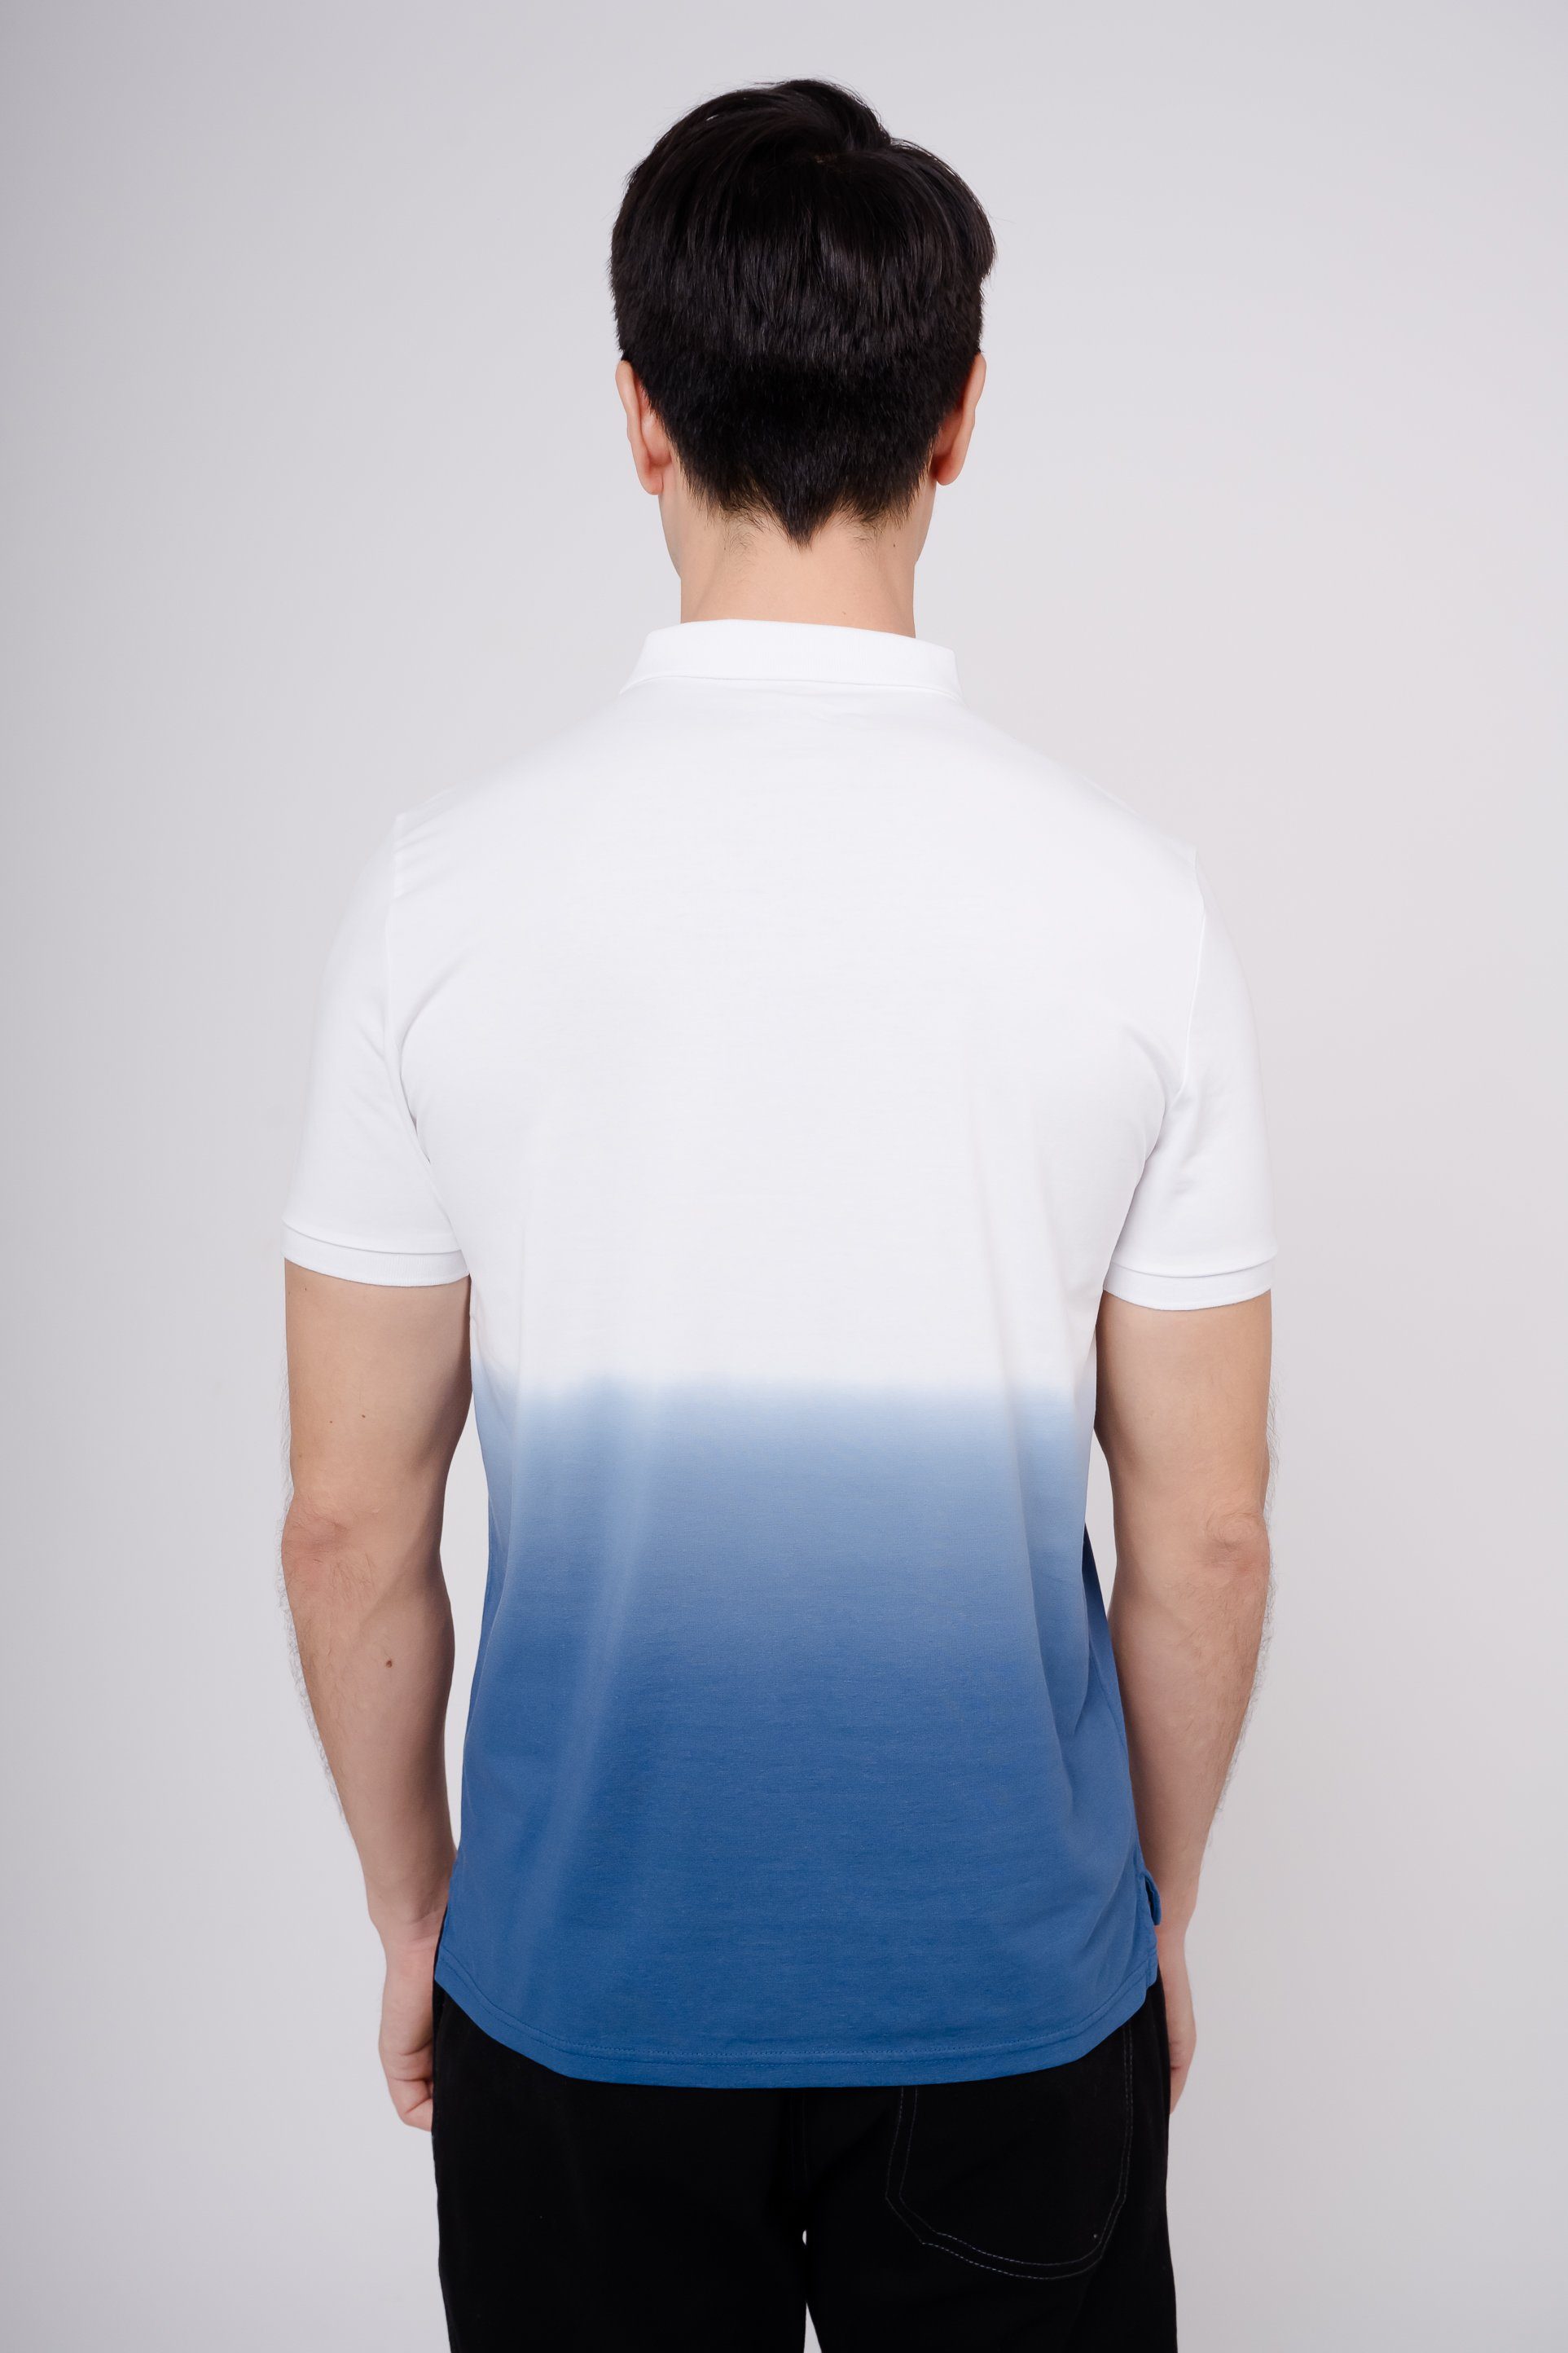 Dye-Effekt blau-weiß Dip GIORDANO mit Poloshirt